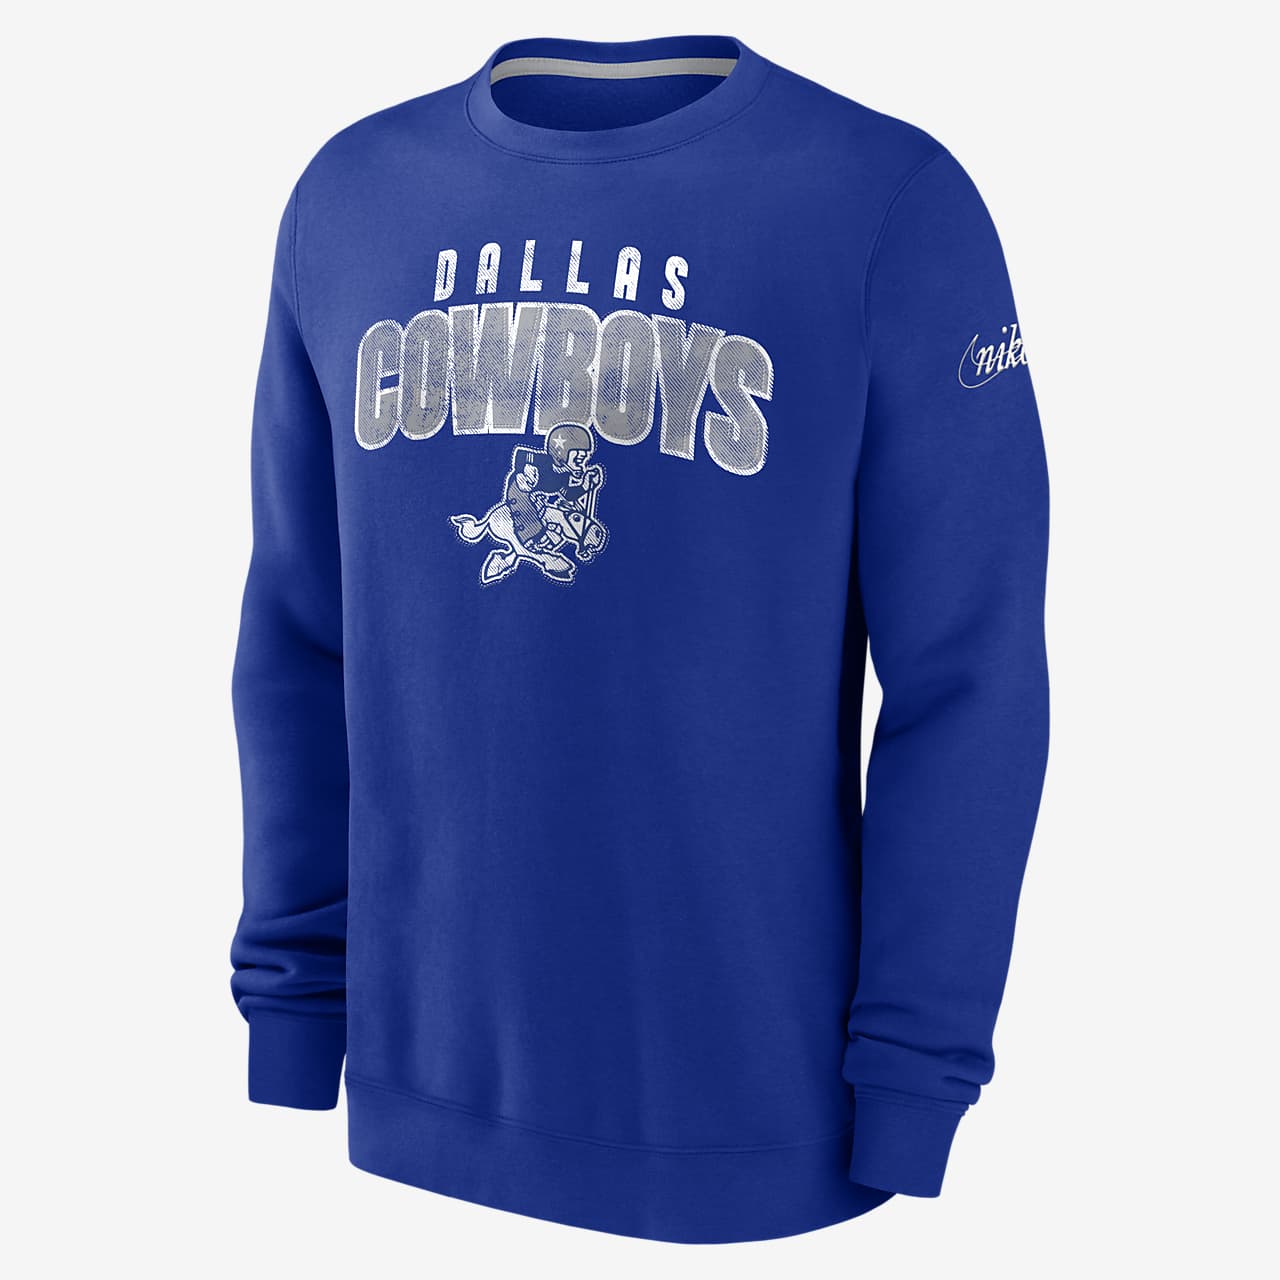 Men's Nike Royal Dallas Cowboys Rewind Club Pullover Sweatshirt Size: Small